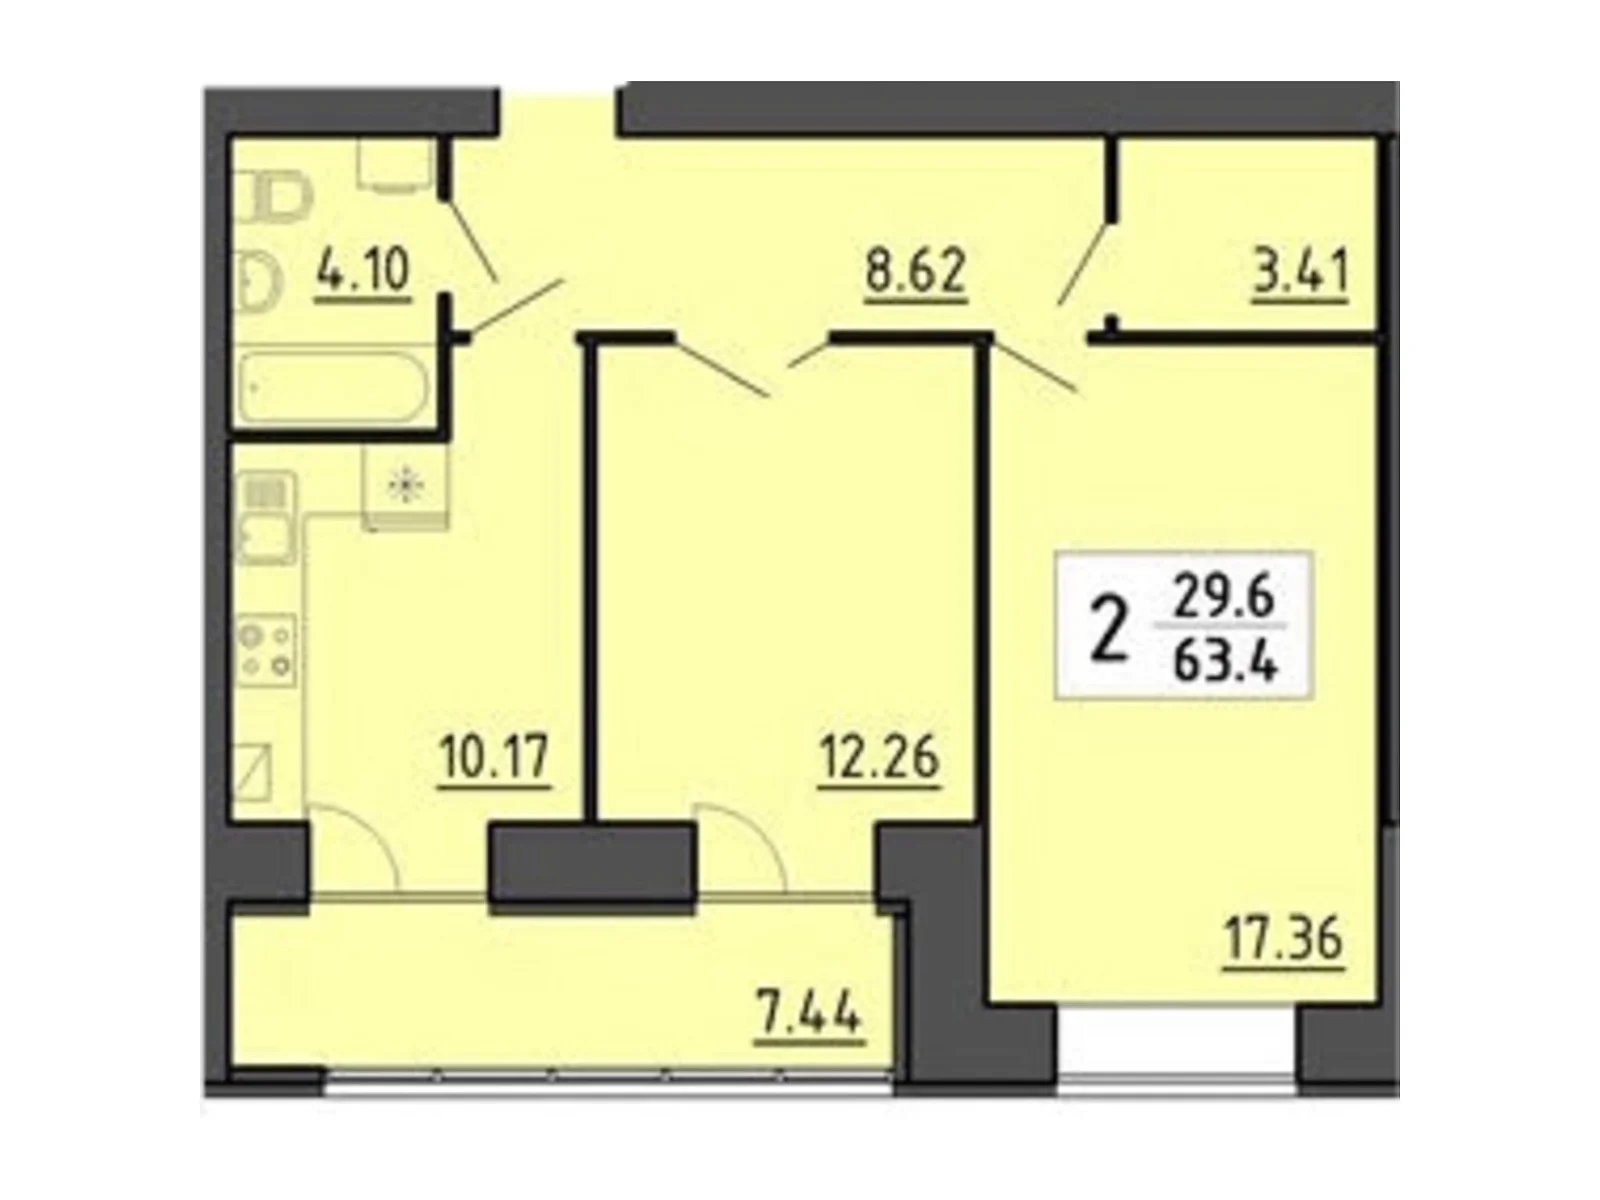 2-кімнатна квартира 63.4 кв. м у Тернополі, цена: 47488 $ - фото 1